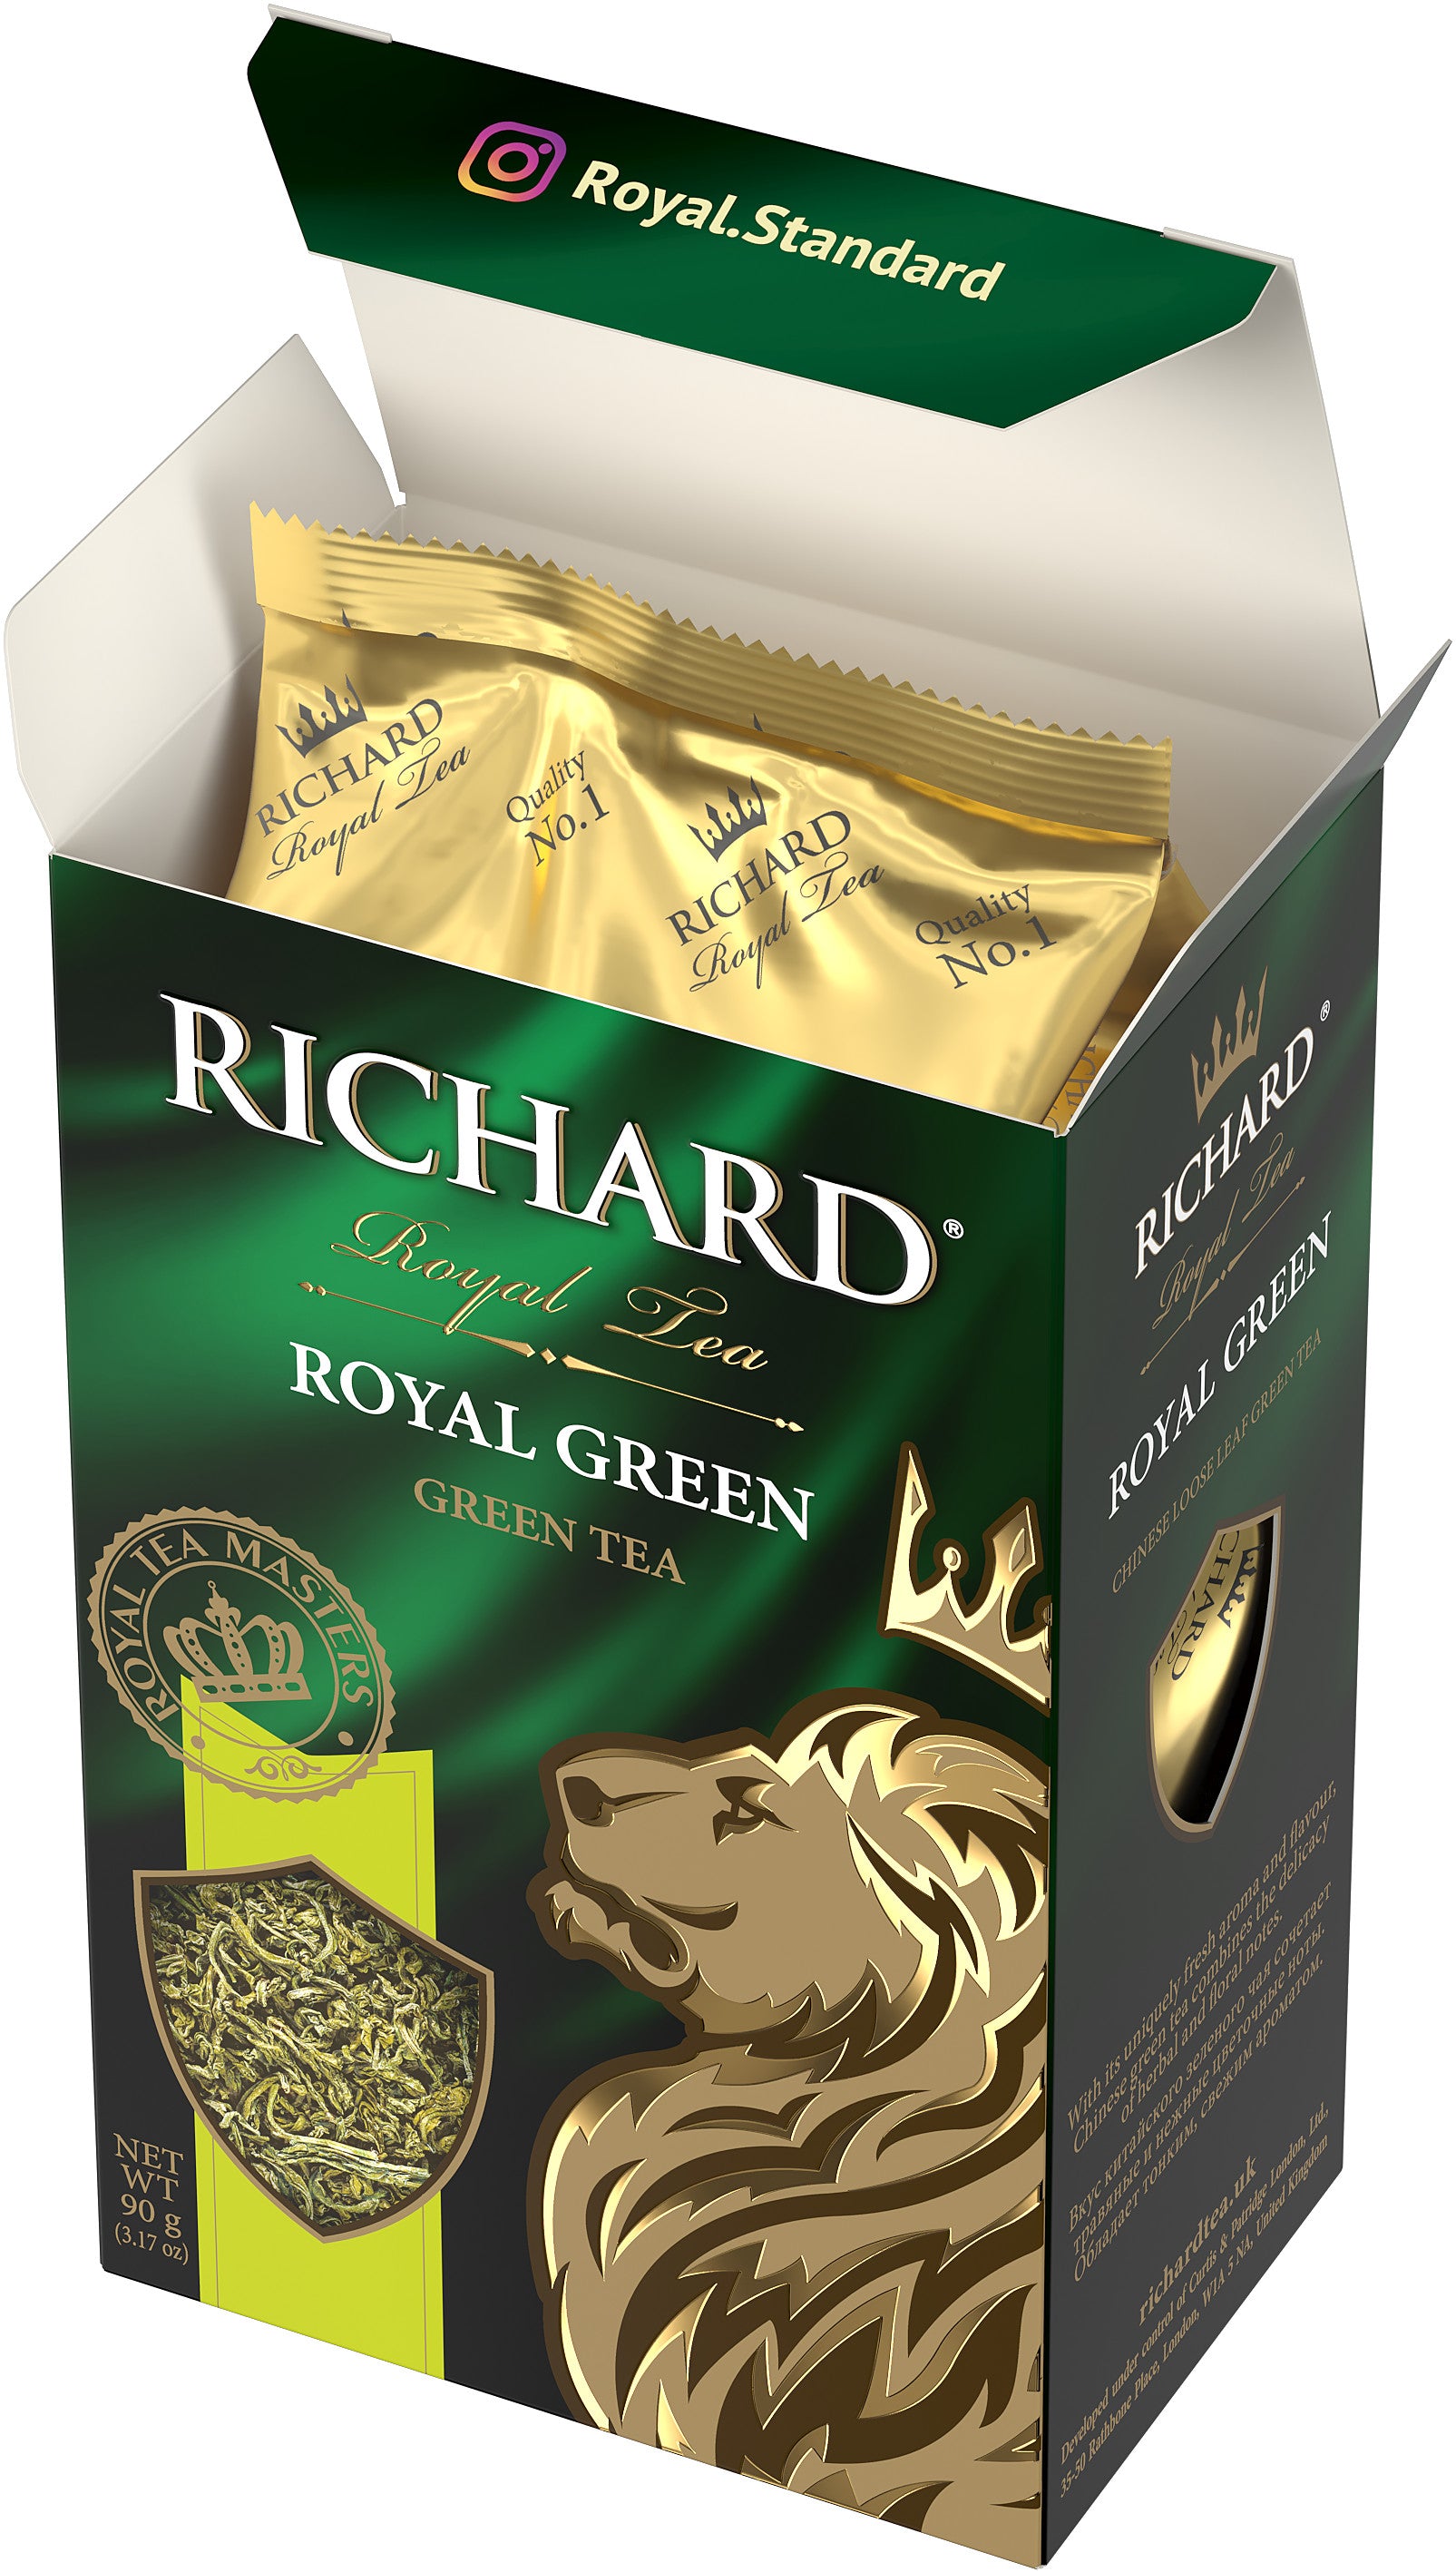 Royal Green, loose leaf green tea, 90g